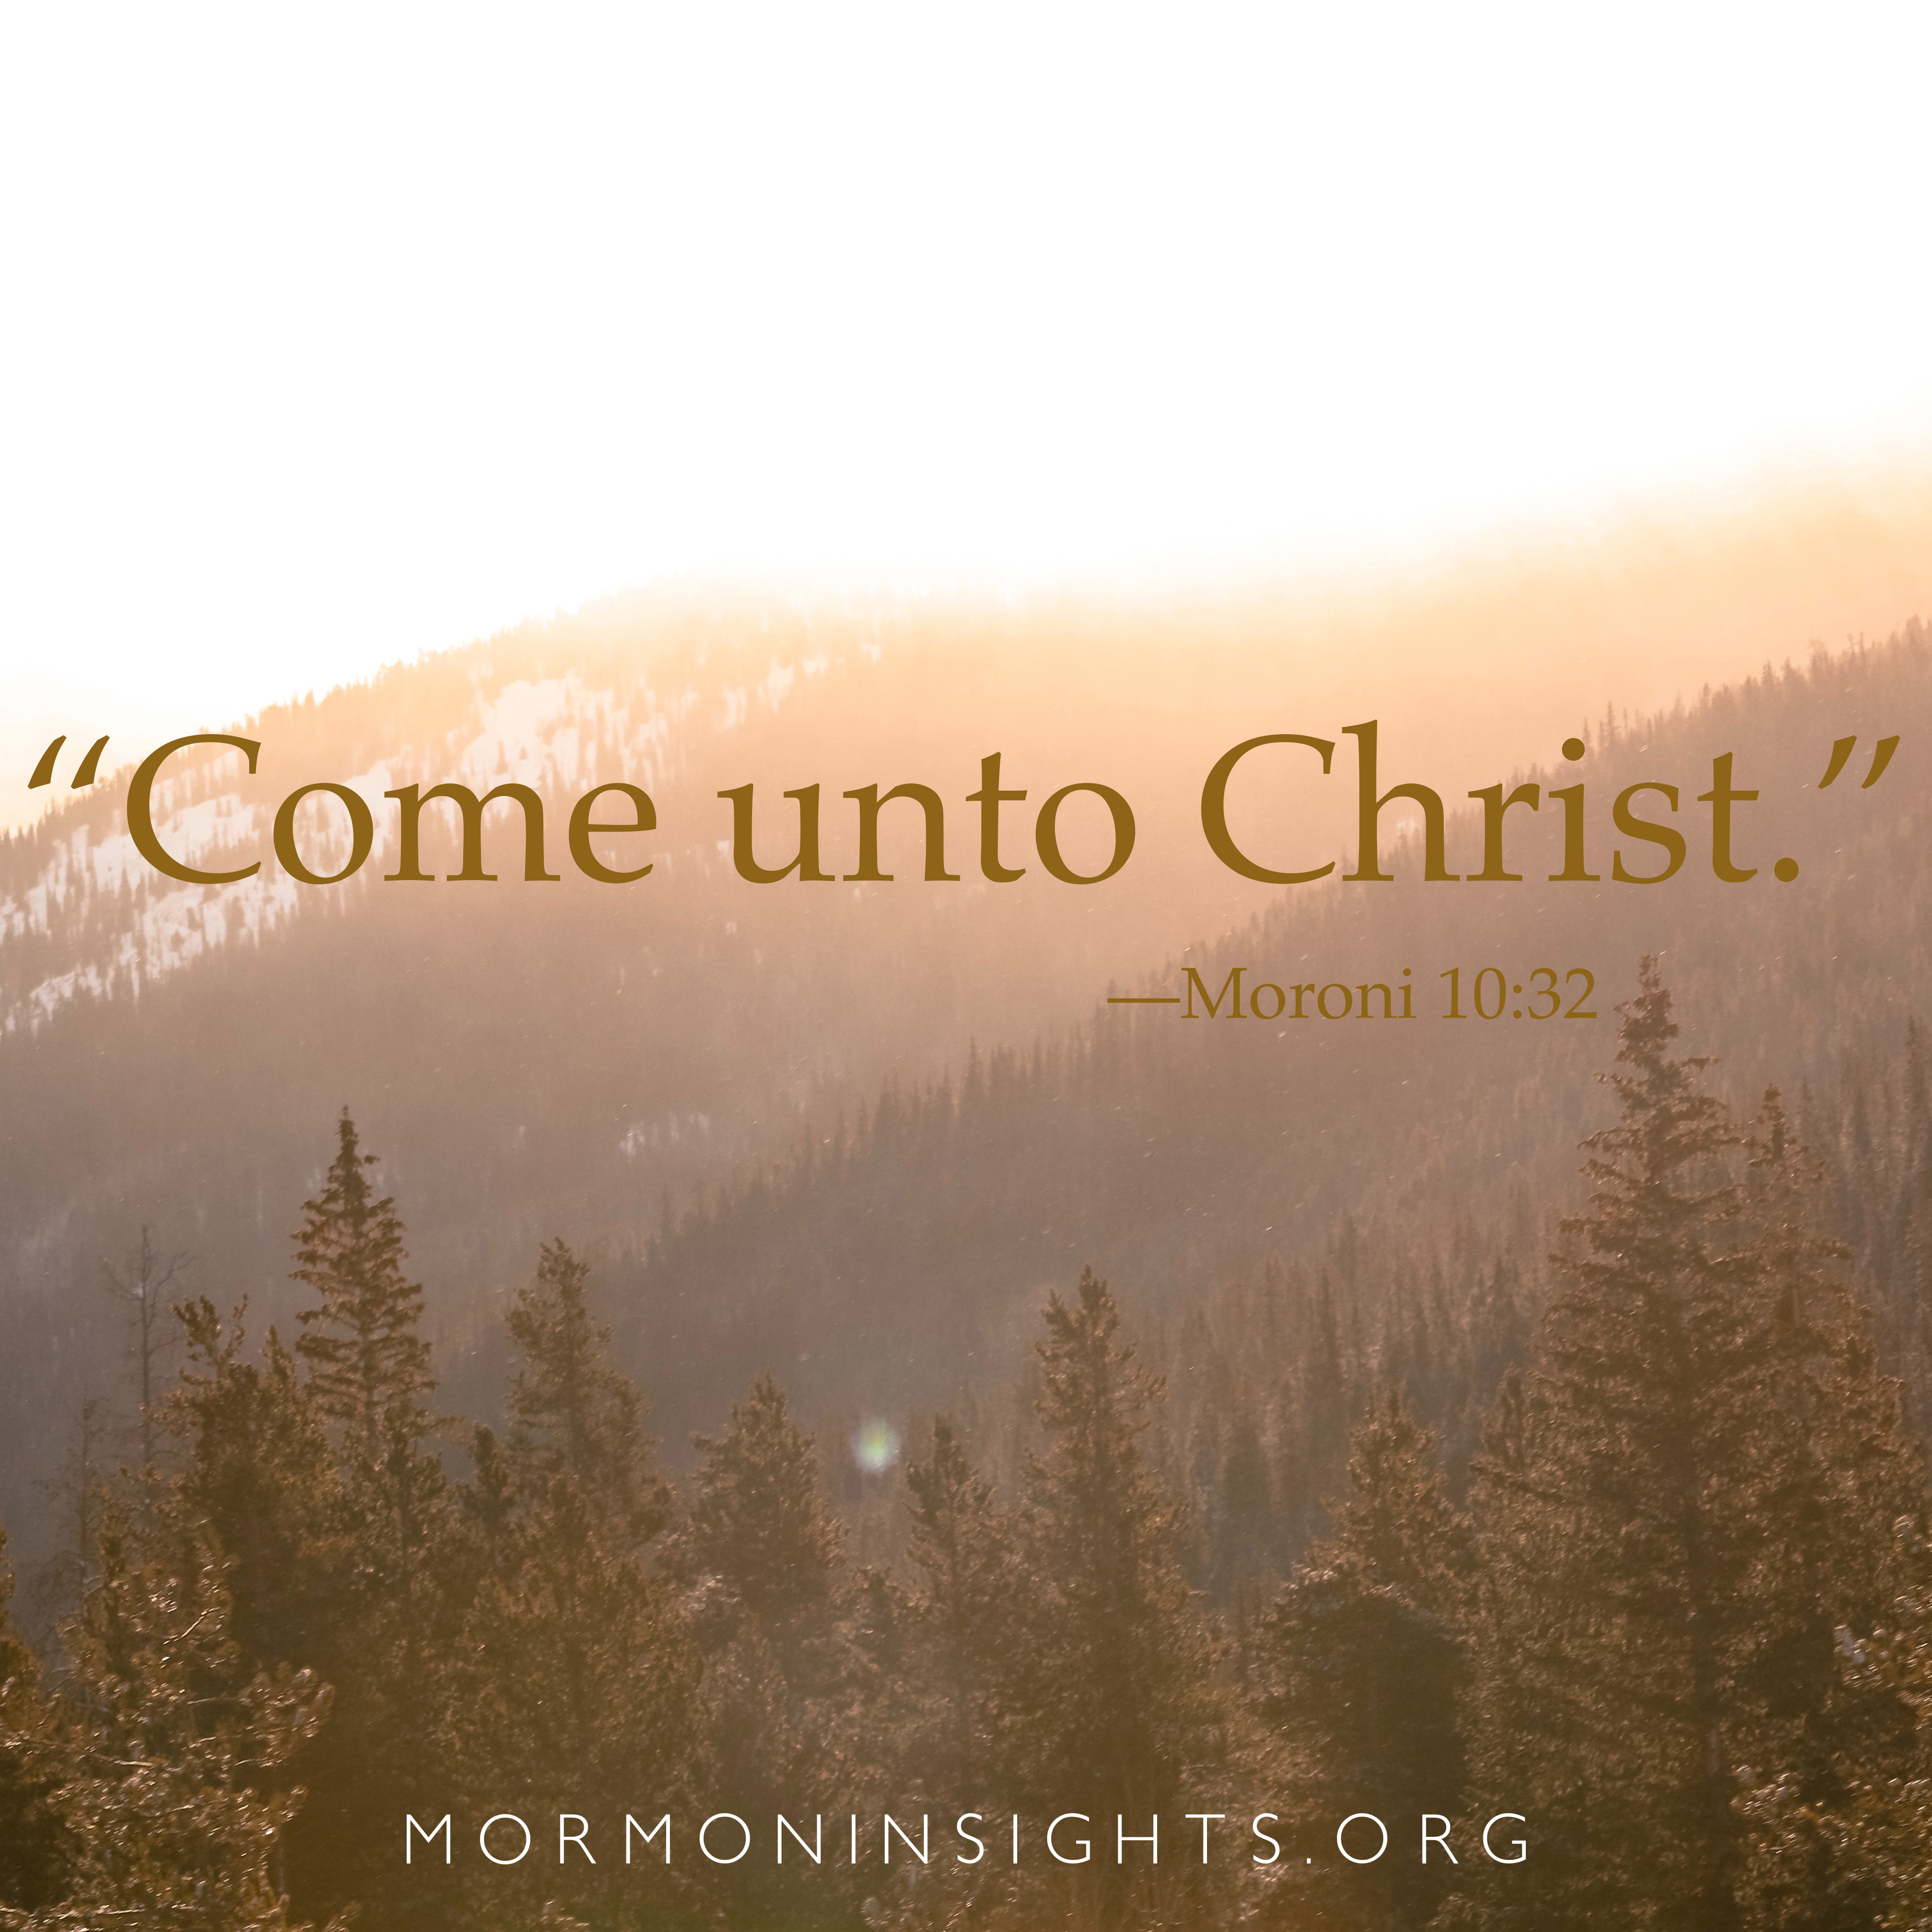 "Come unto Christ." -Moroni 10:32. mountain view with trees